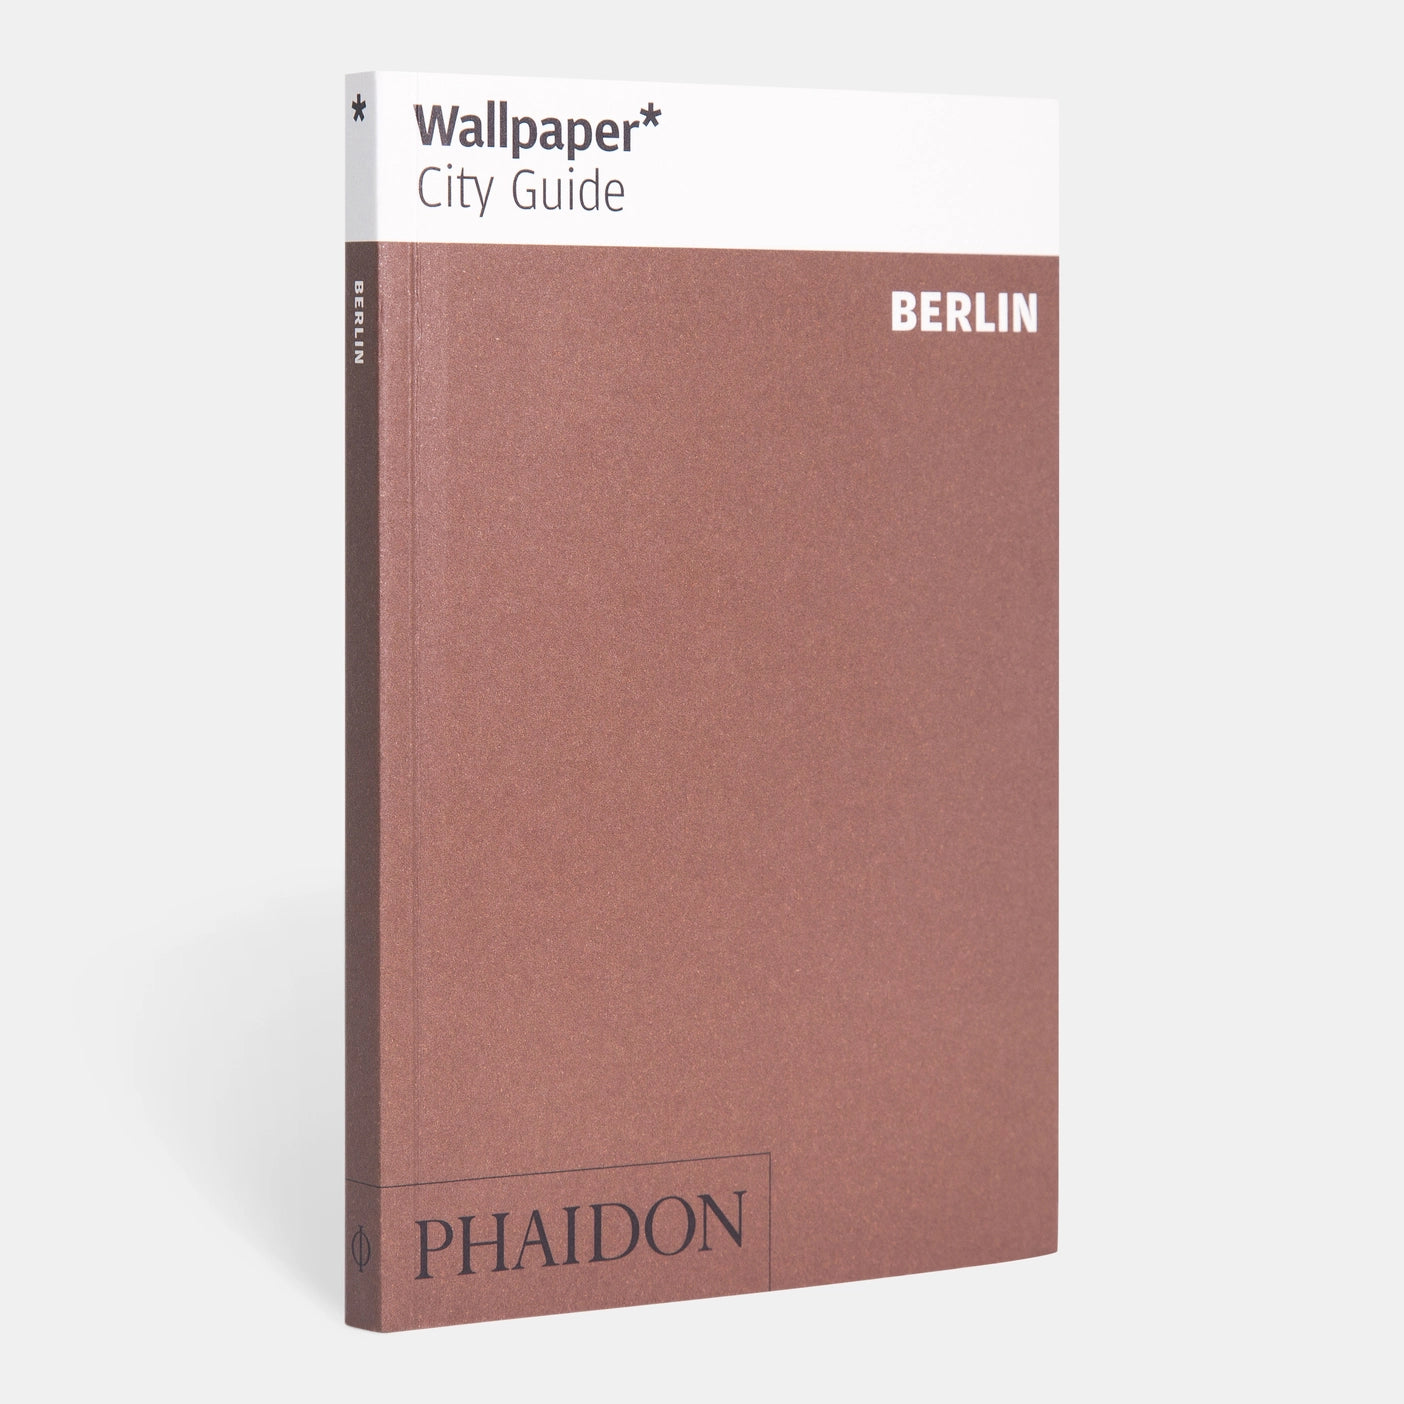 Wallpaper* City Guide Berlin